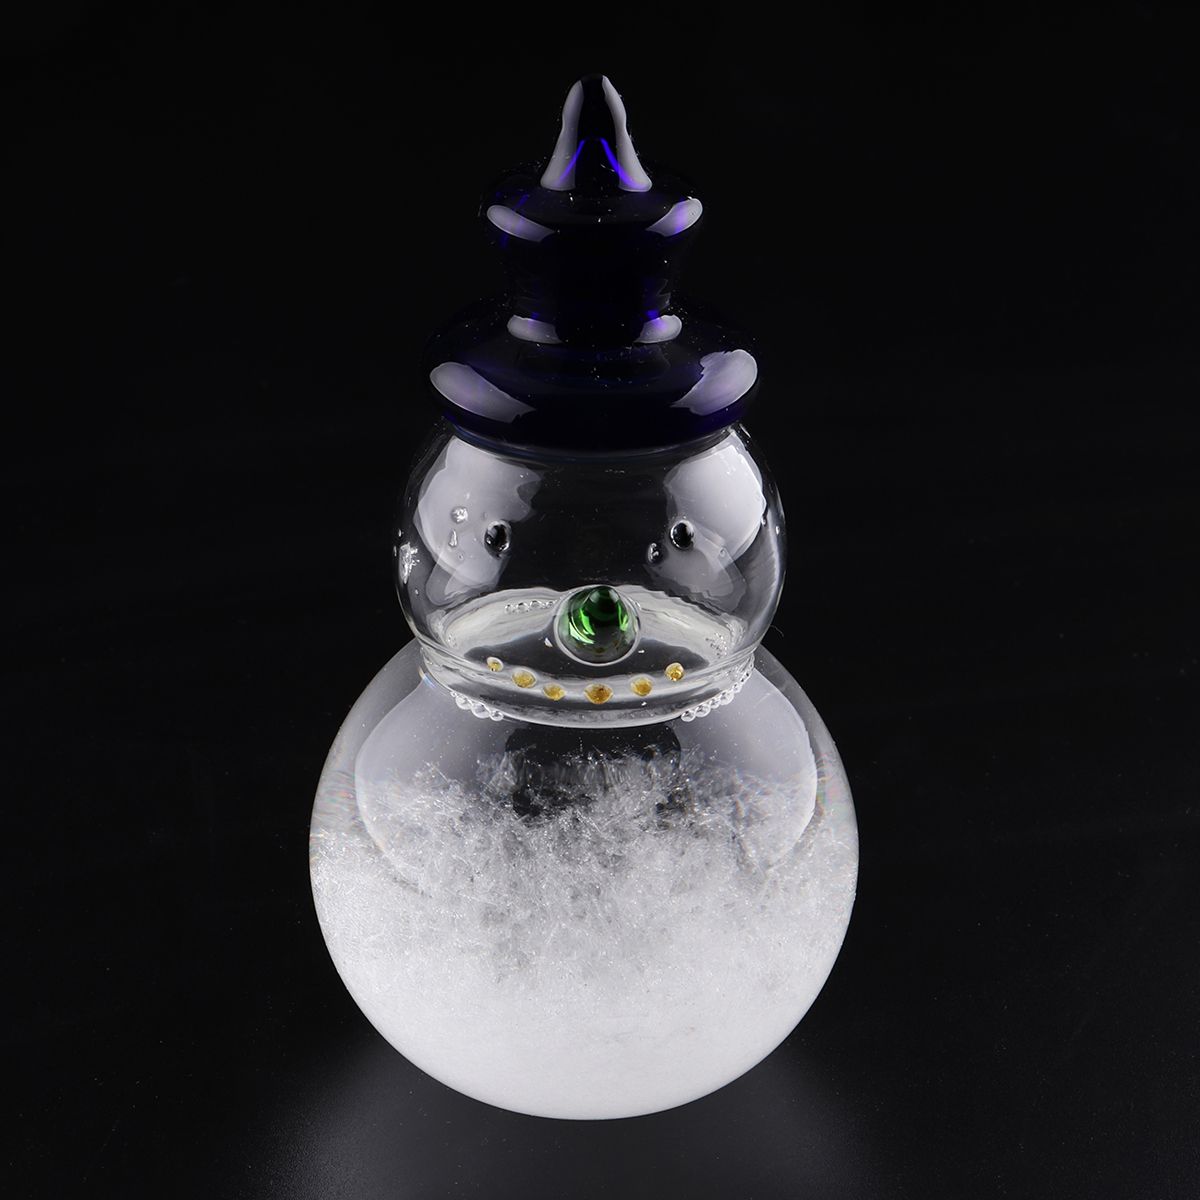 Weather-Forecast-Barometer-Snowman-Shape-Storm-Glass-Bottle-Desktop-Decoration-Ornament-Gift-1263071